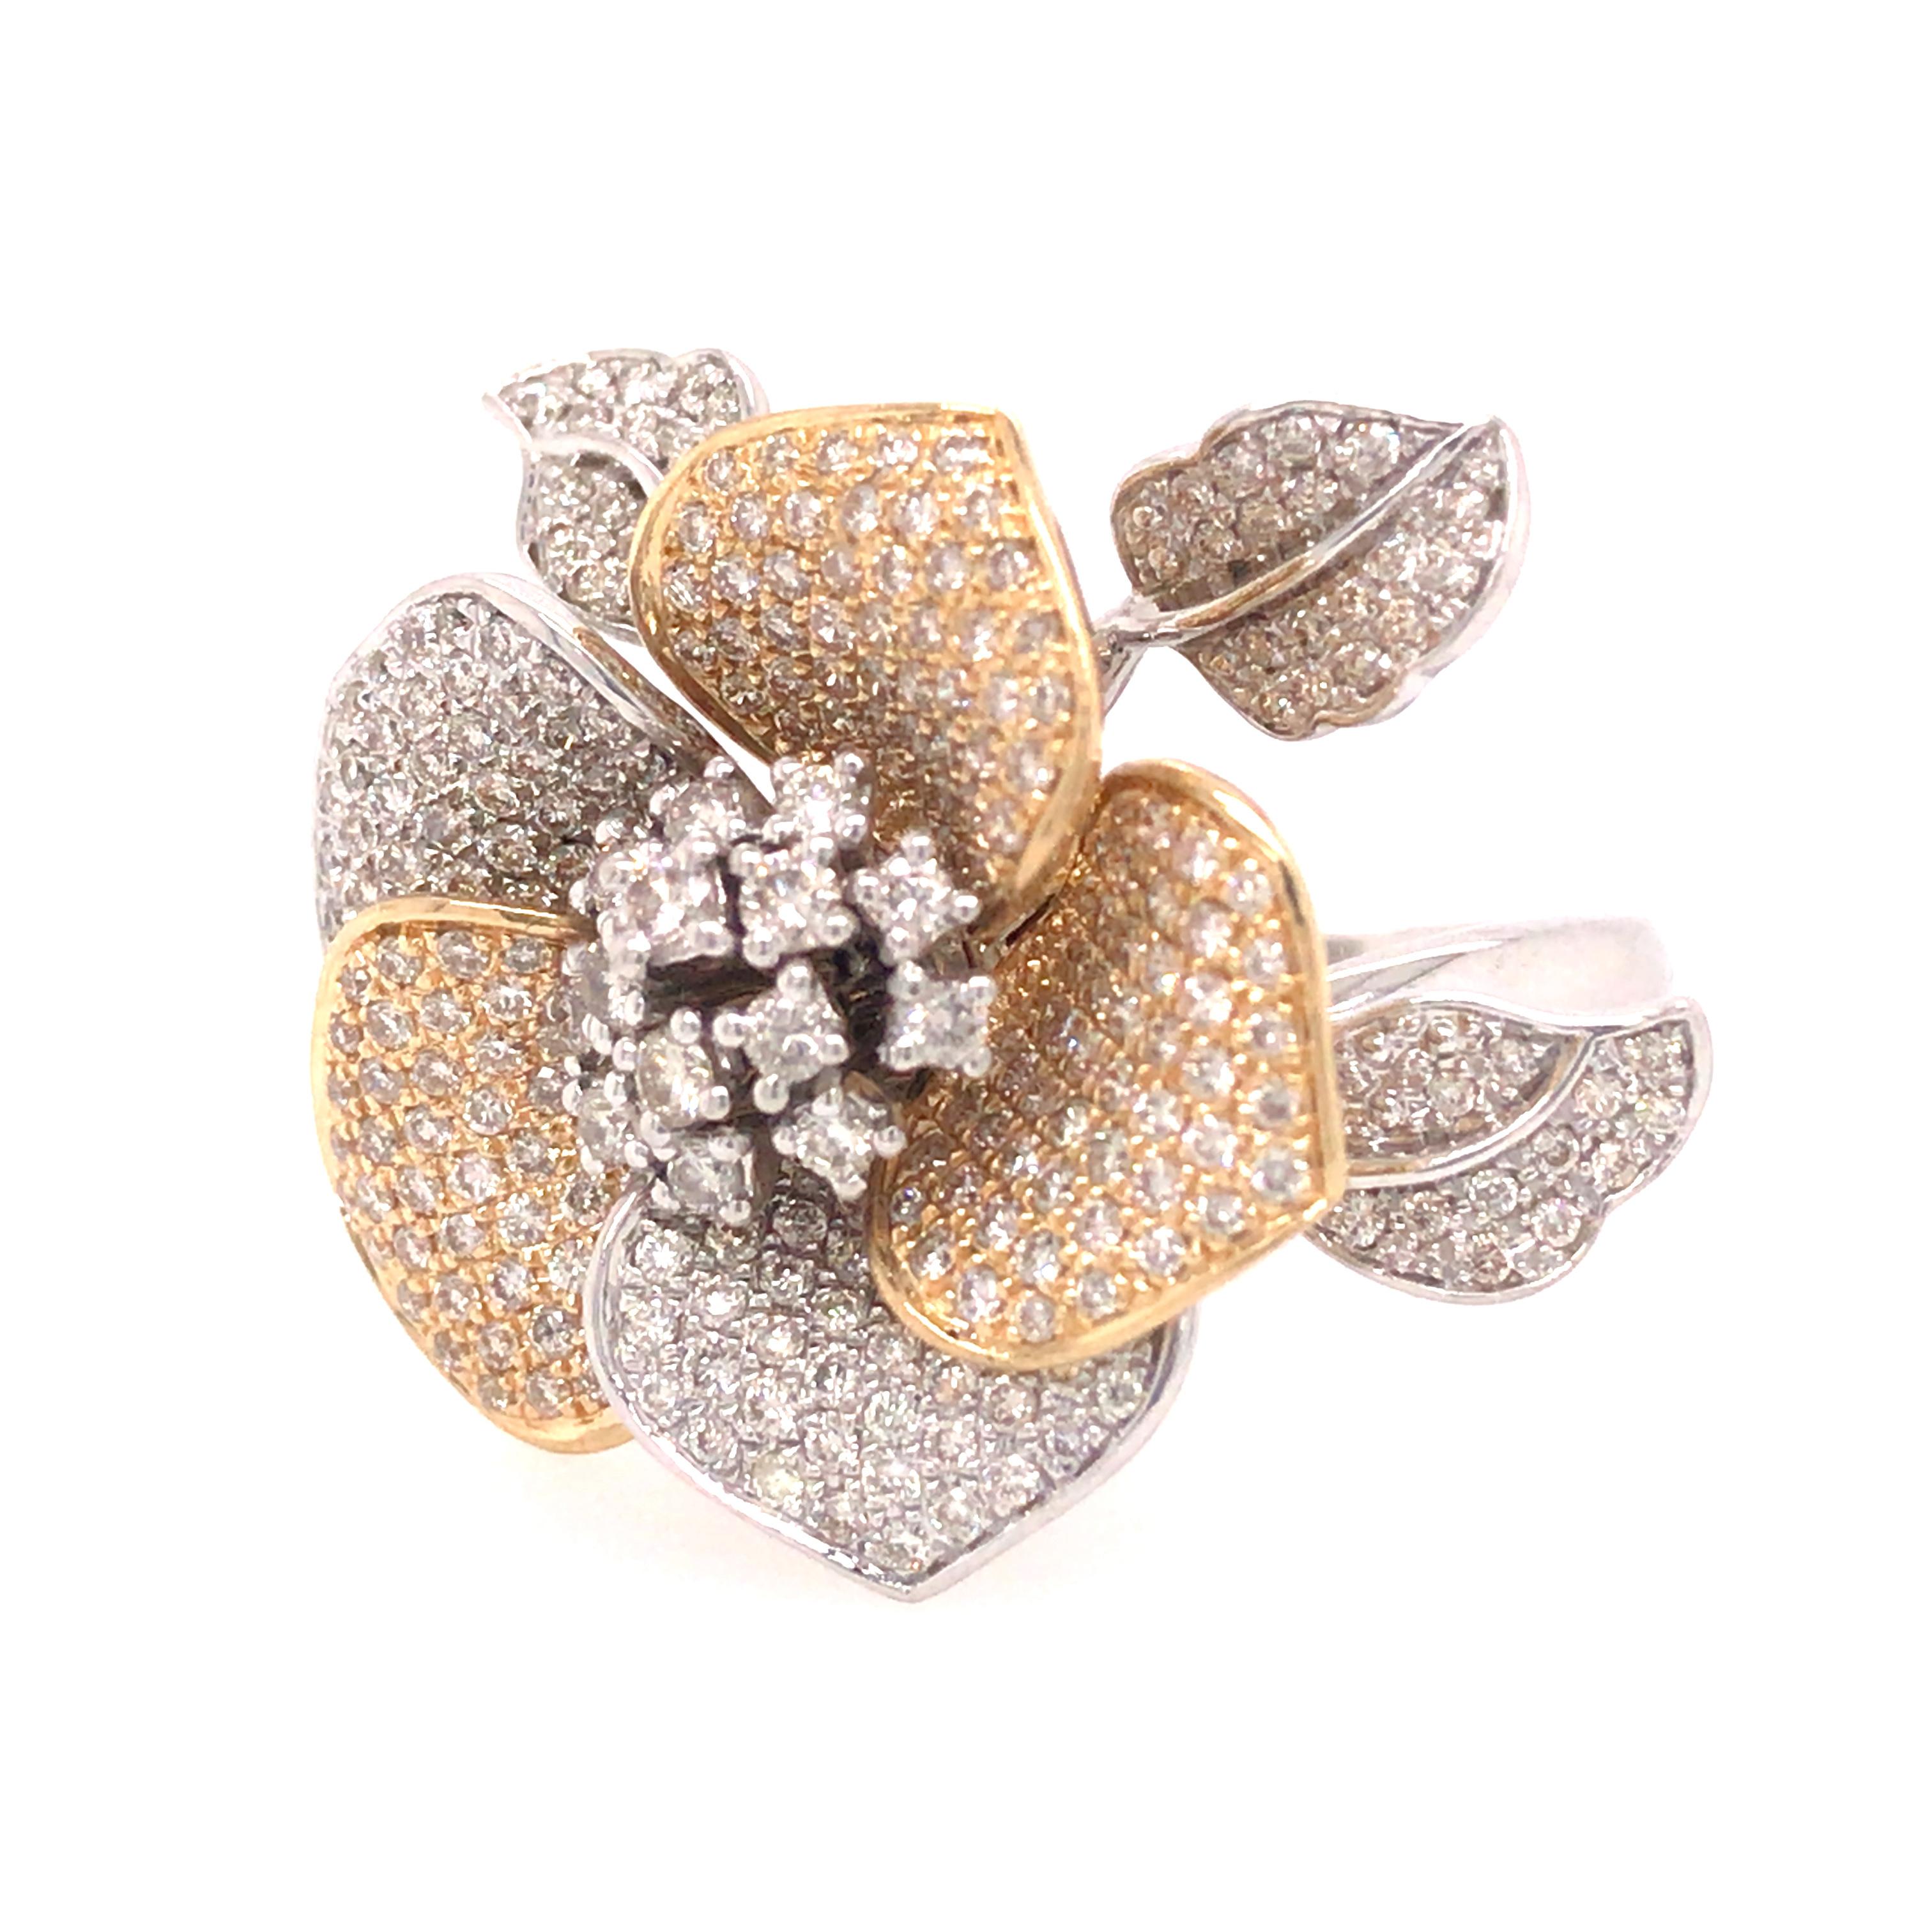 Round Cut 14K Diamond Flower Ring Two-Tone Gold